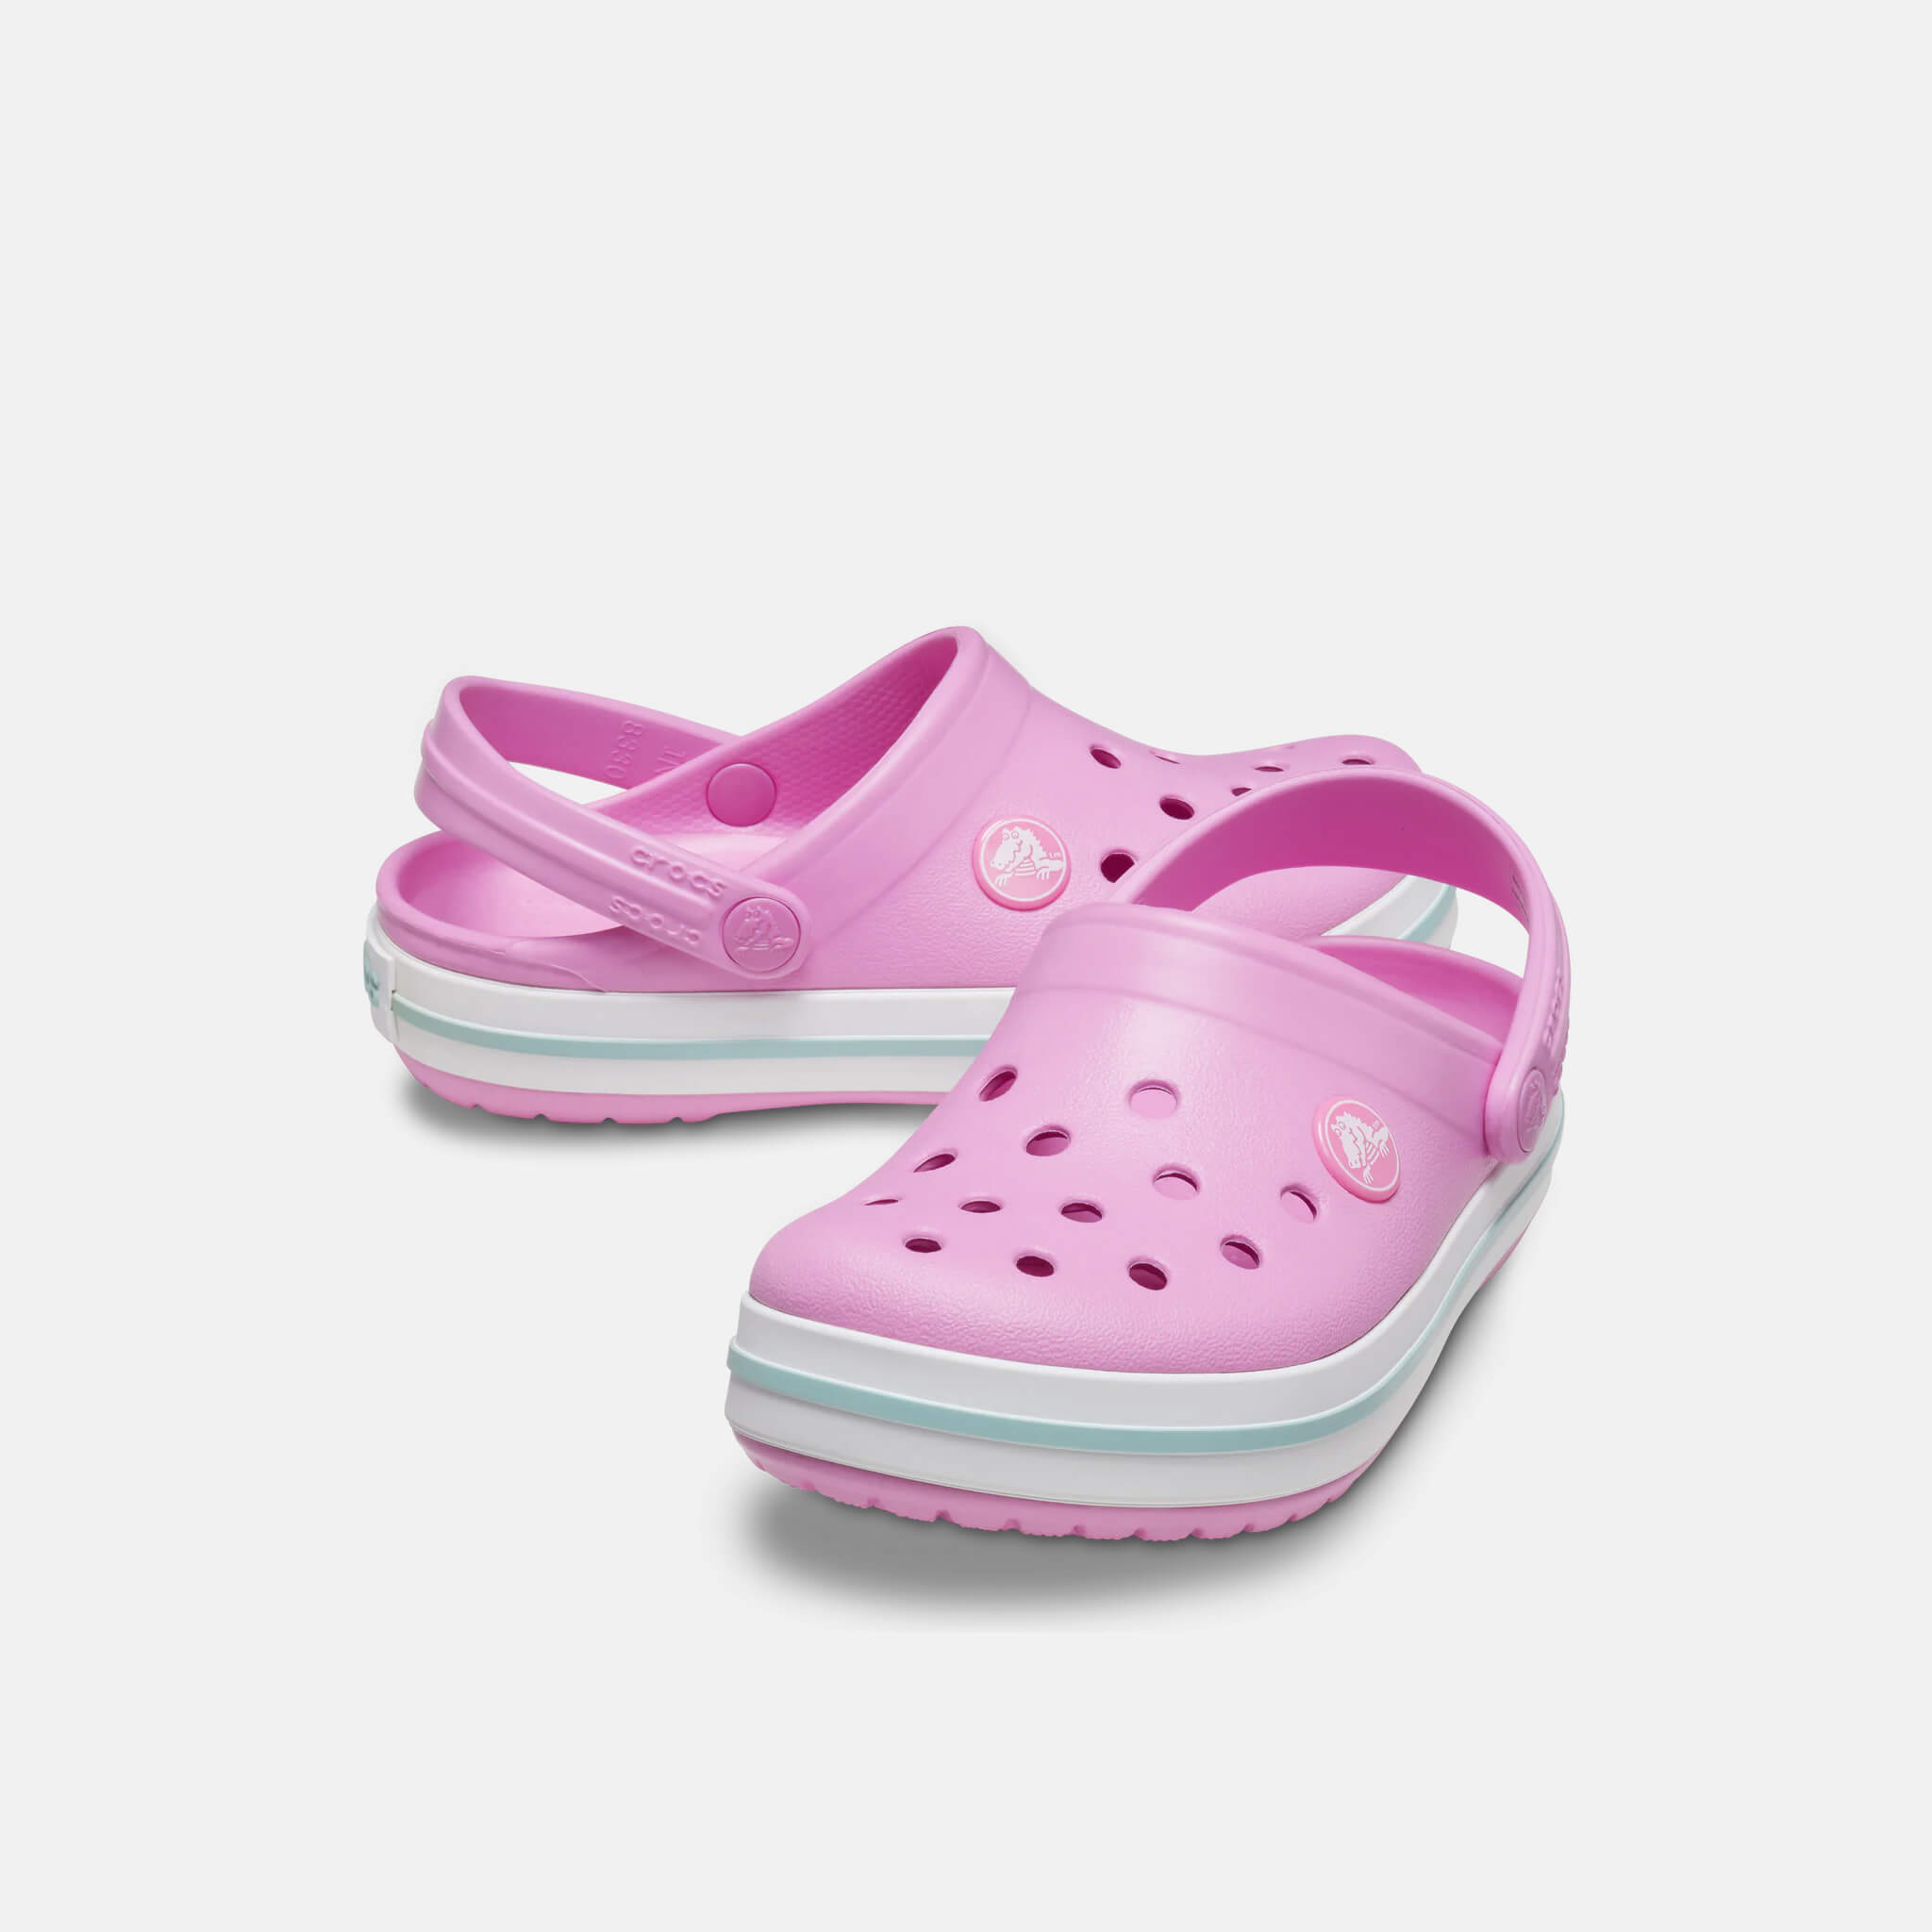 Crocband Clog T Taffy Pink